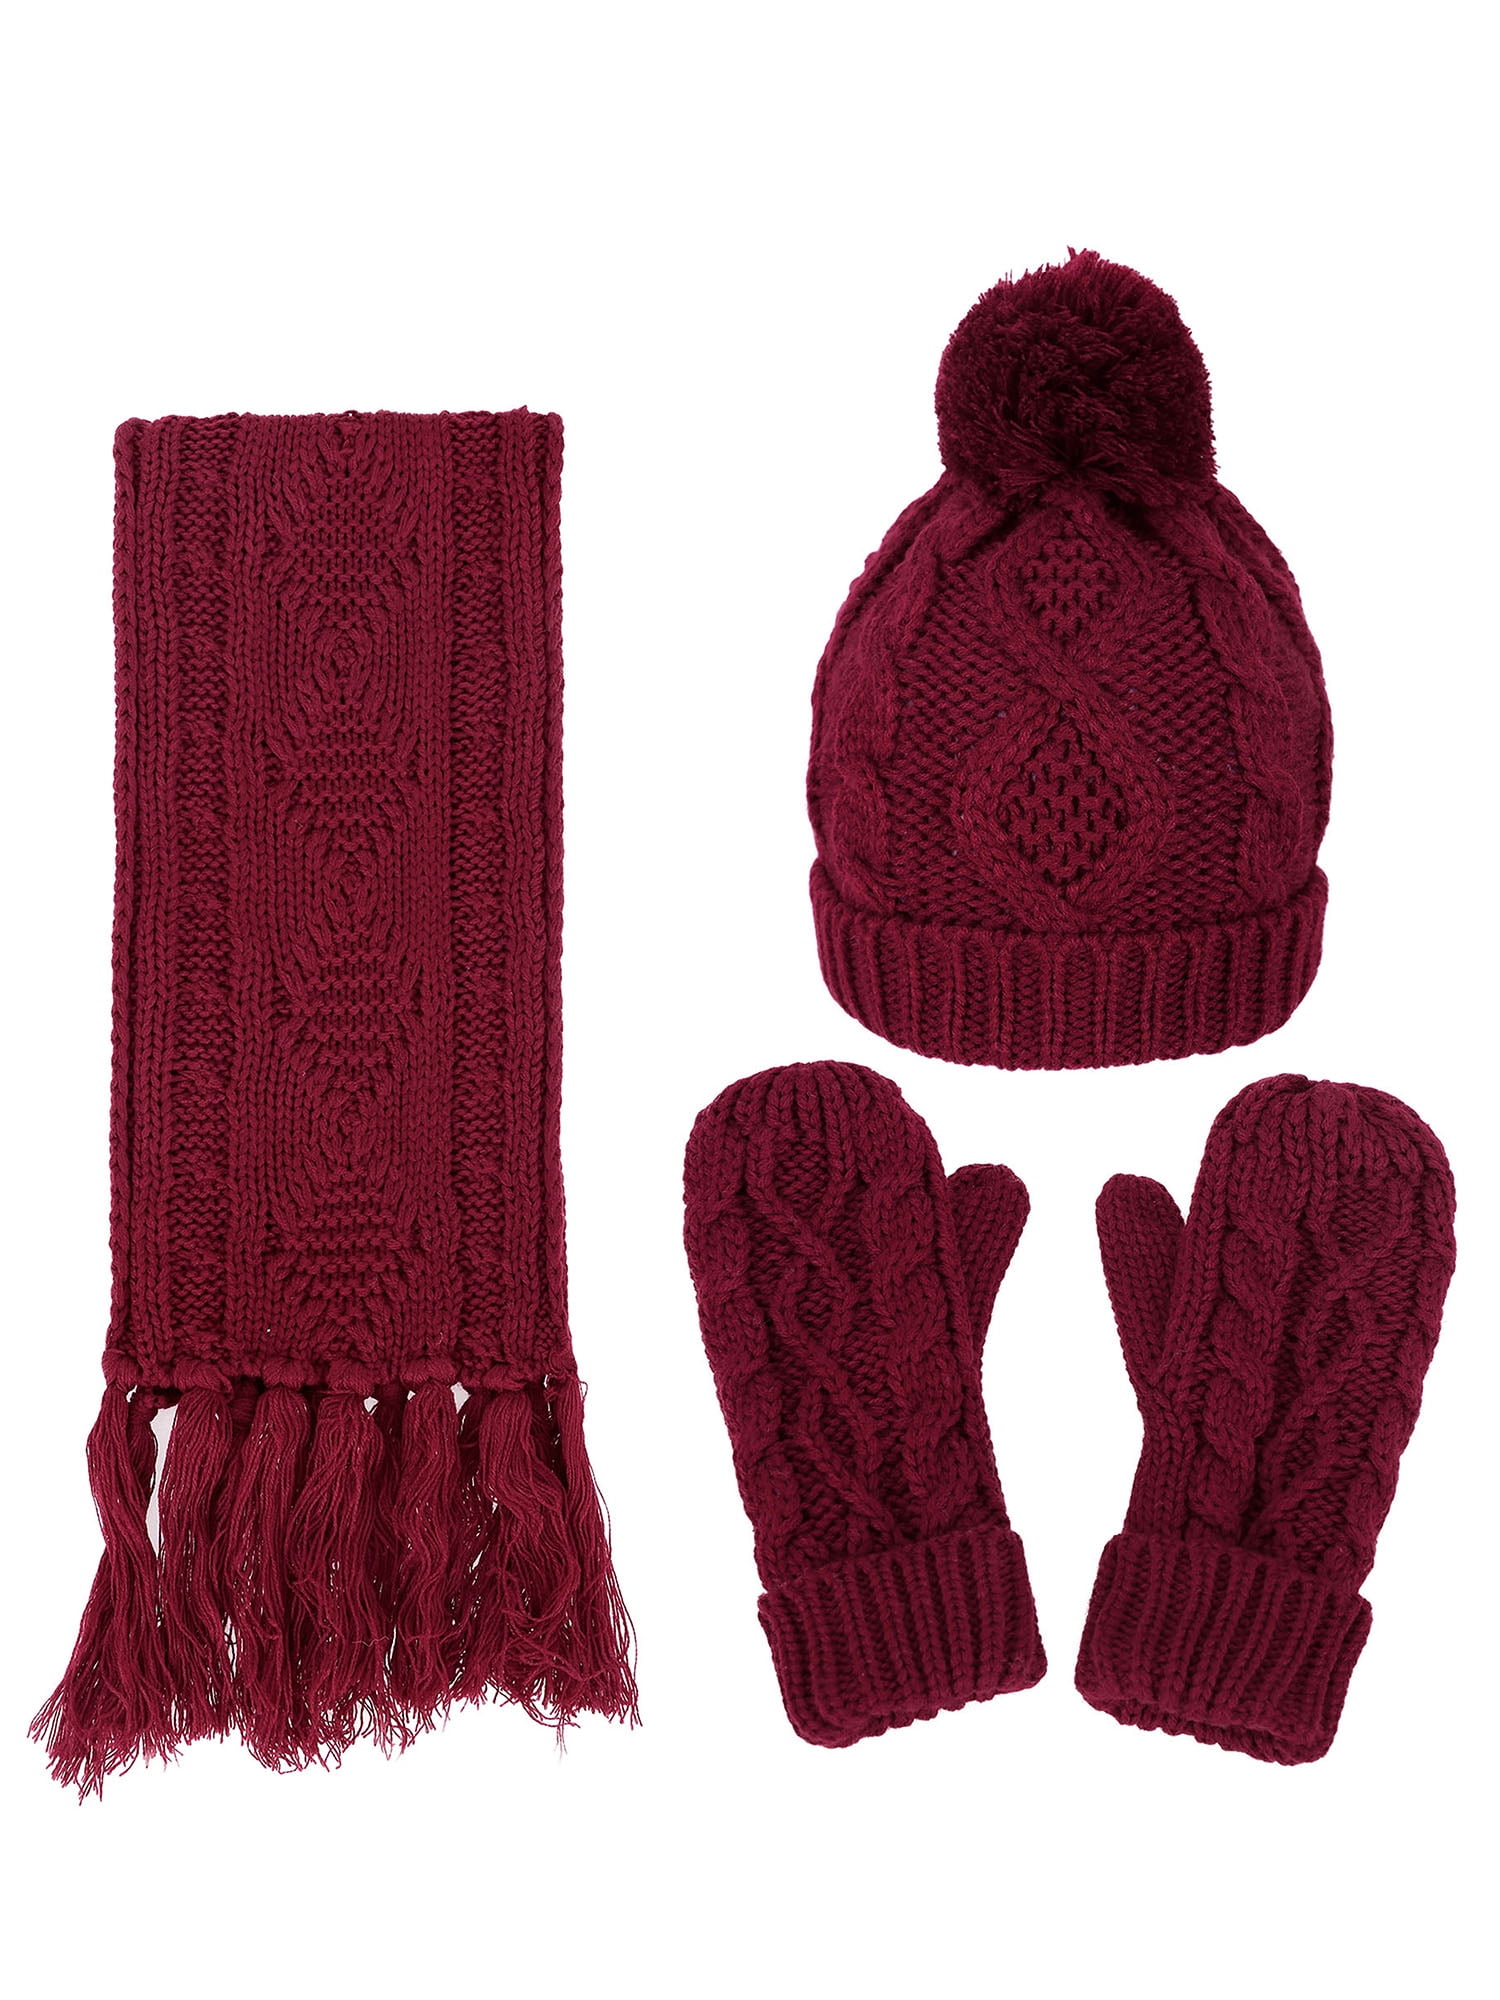 Sportoli Women’s Girls’ kids 3-Piece Cable Knit Cold Weather Set Hat Scarf Glove